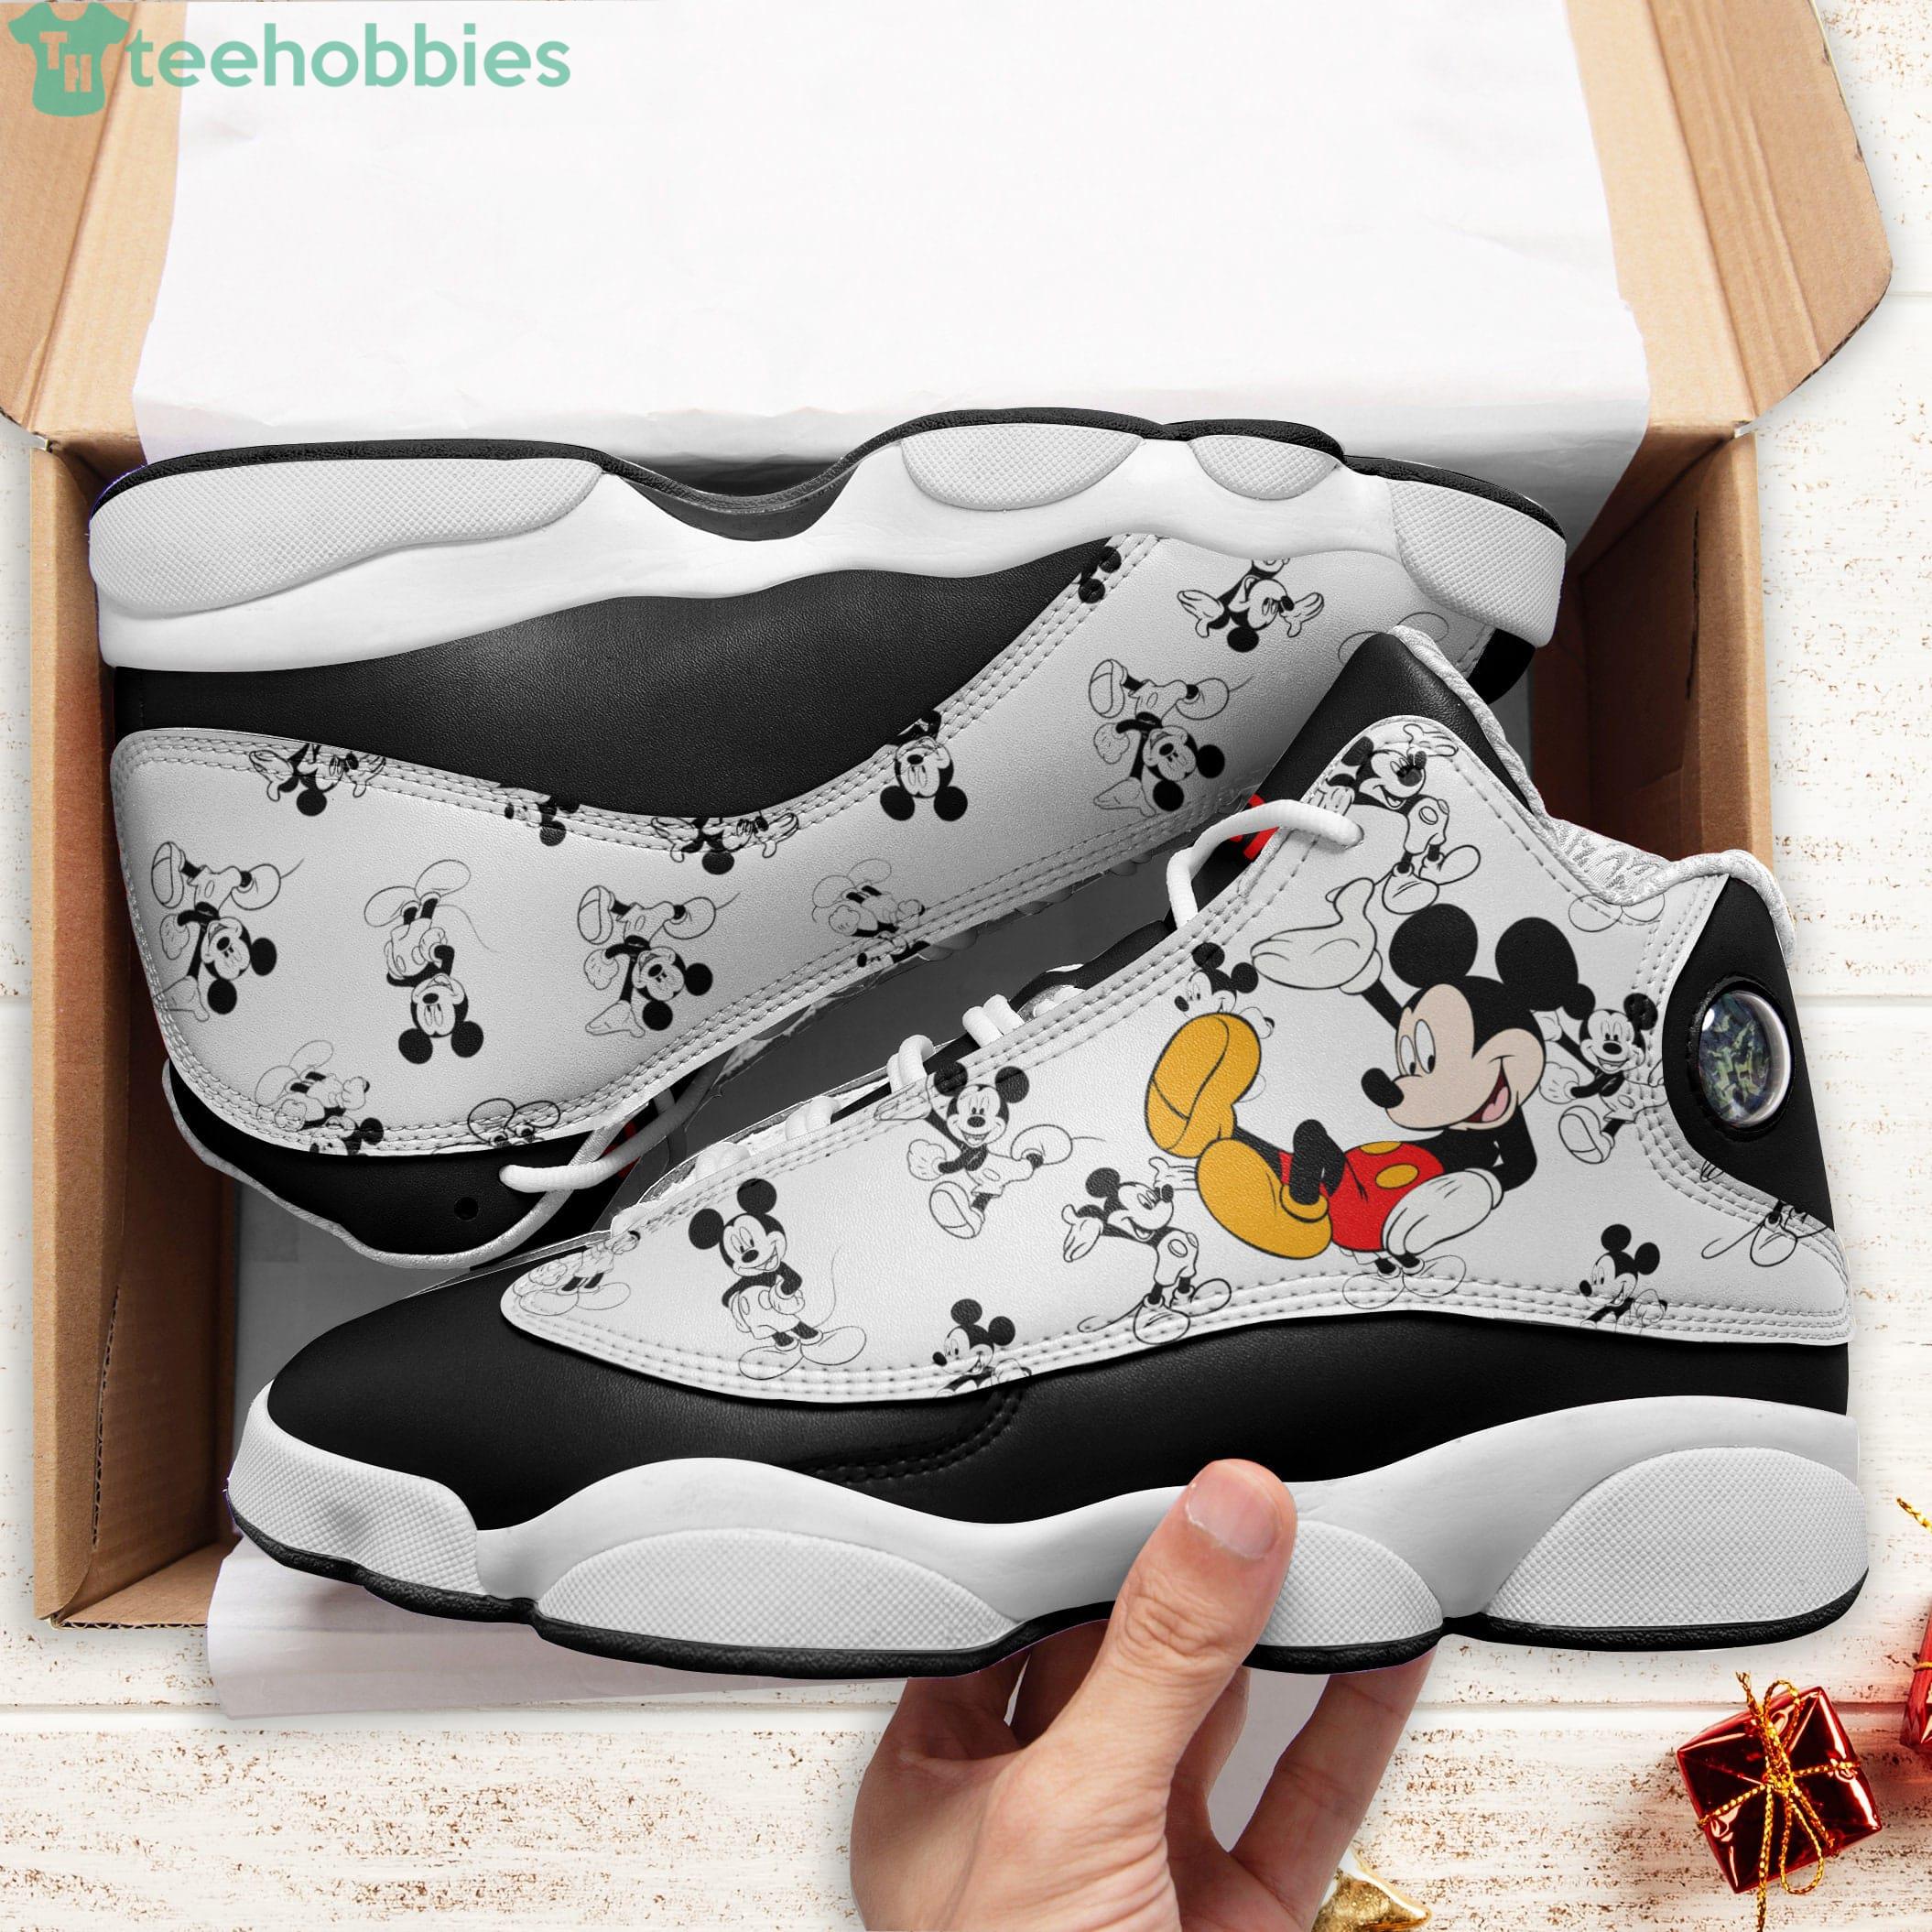 Louis Vuitton Mickey Mouse Air Jordan 13 Sneakers Shoes